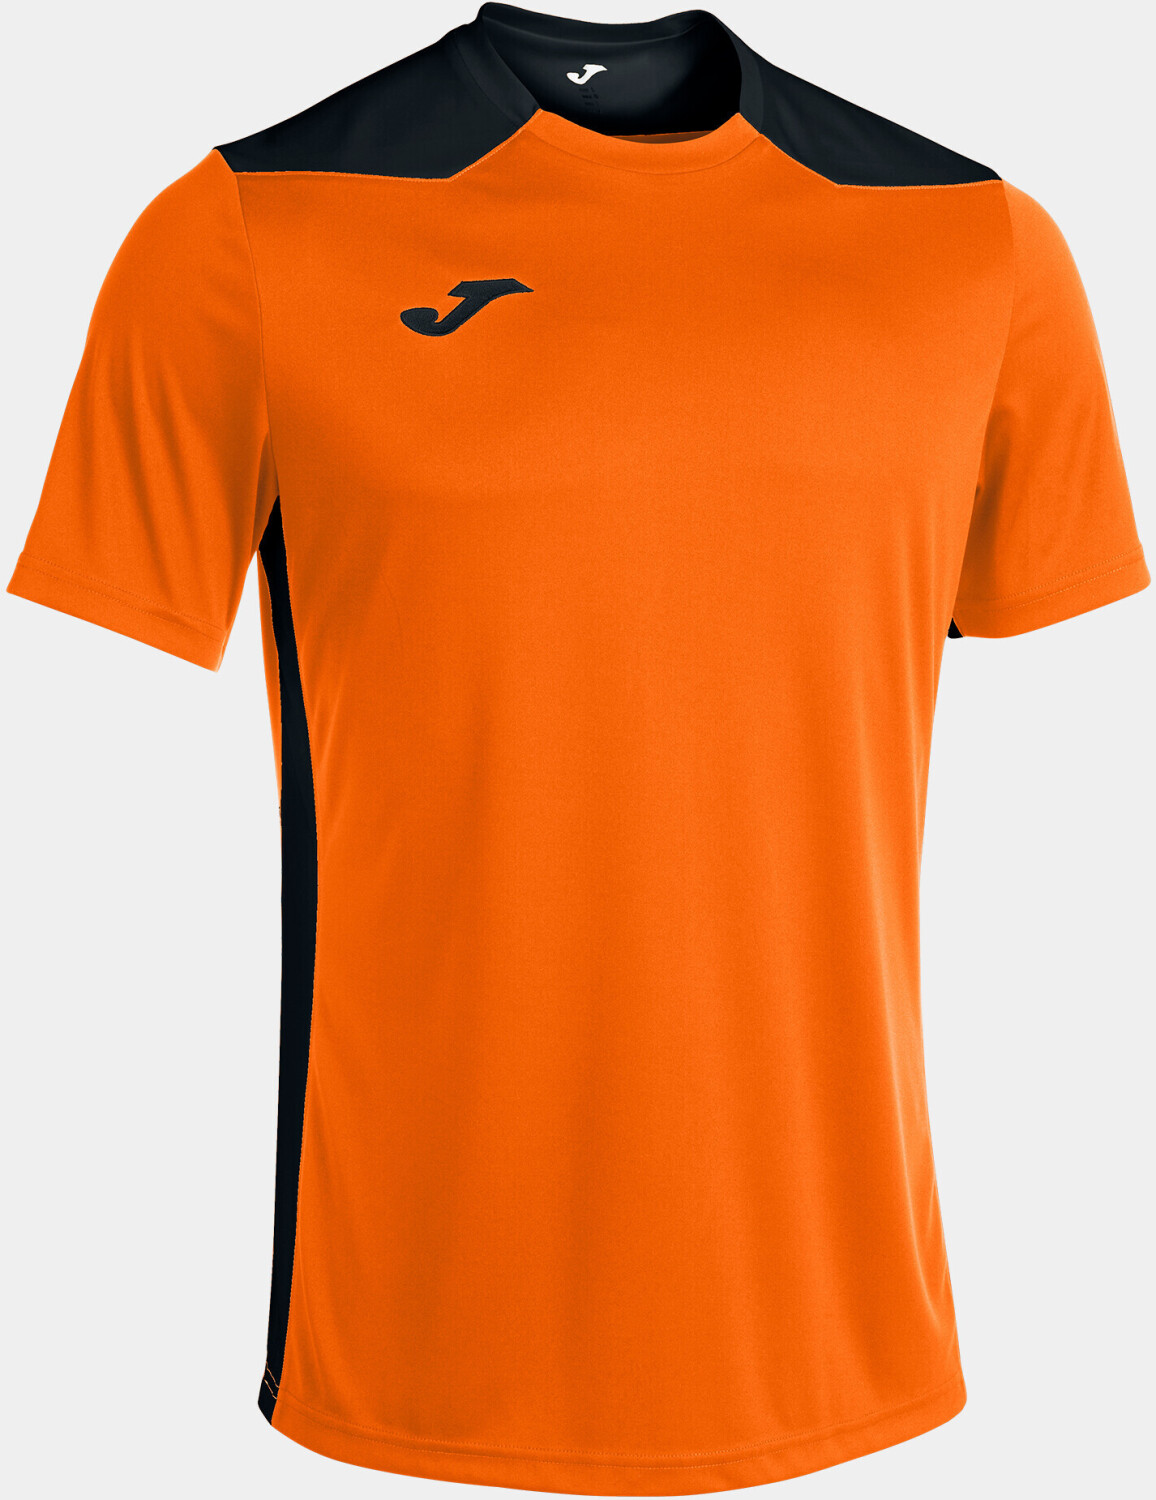 Photos - Football Kit Joma Championship VI Shirt Youth  orange/black (101822k)